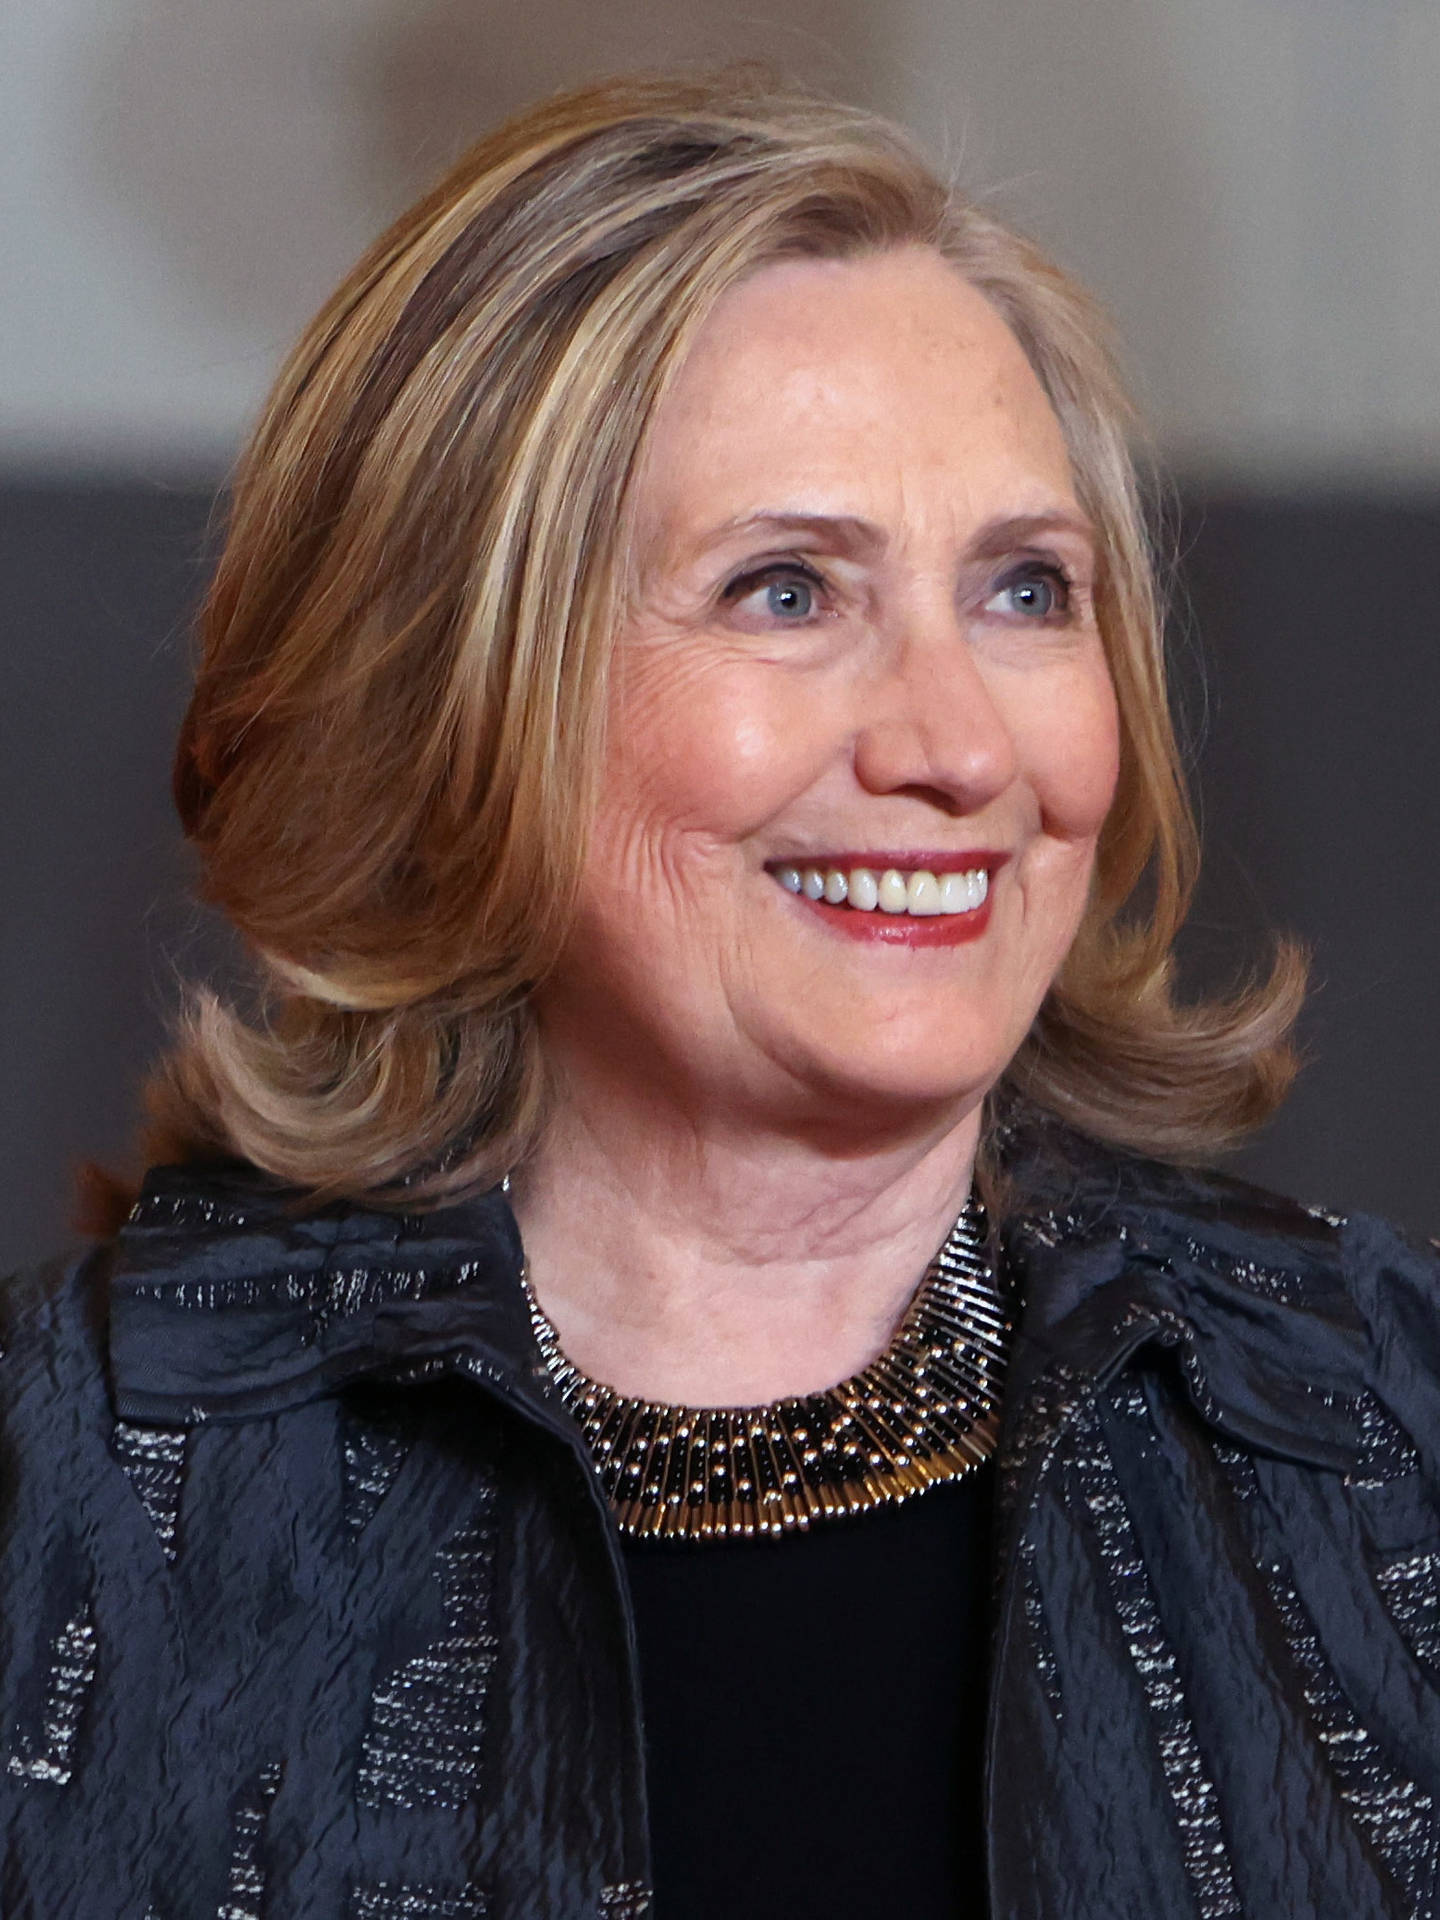 Hillary Clinton Side Profile